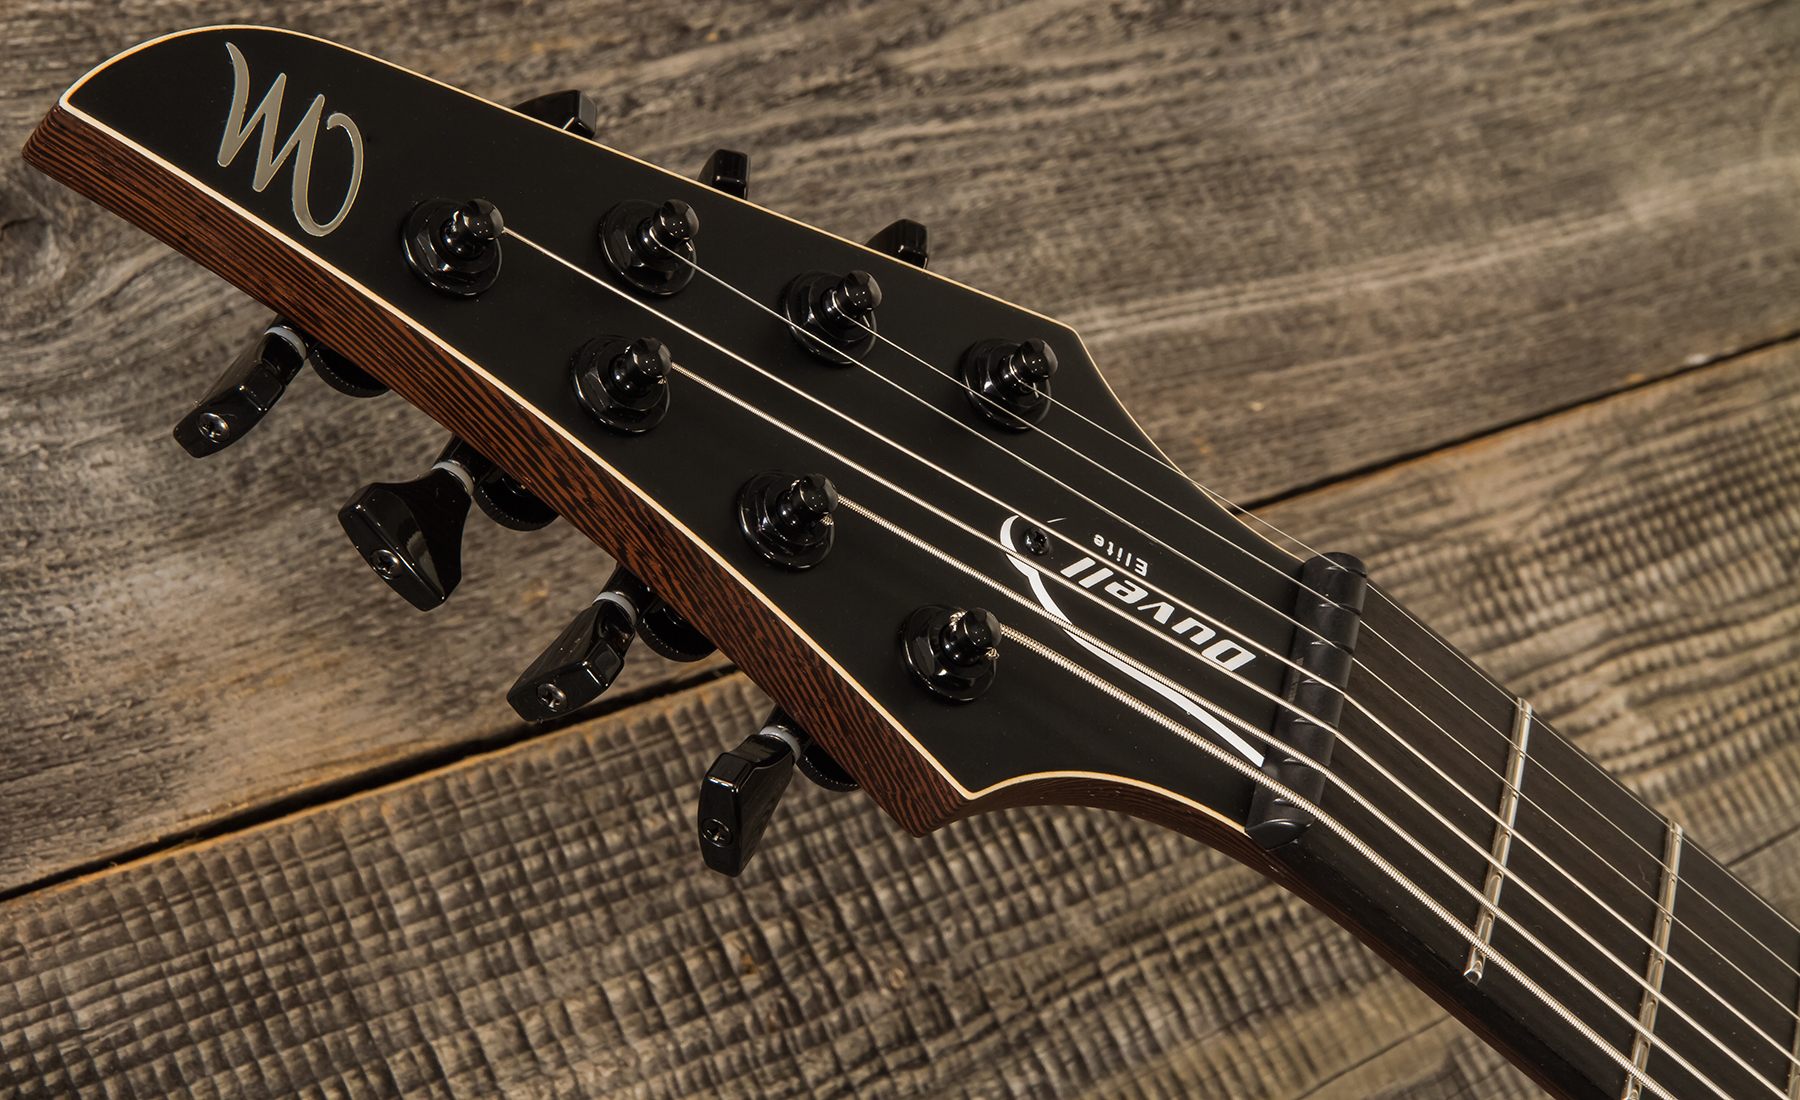 Mayones Guitars Duvell Elite Gothic 7 40th Anniversary 2h Tko Eb #df2205923 - Antique Black Satin - 7 string electric guitar - Variation 5